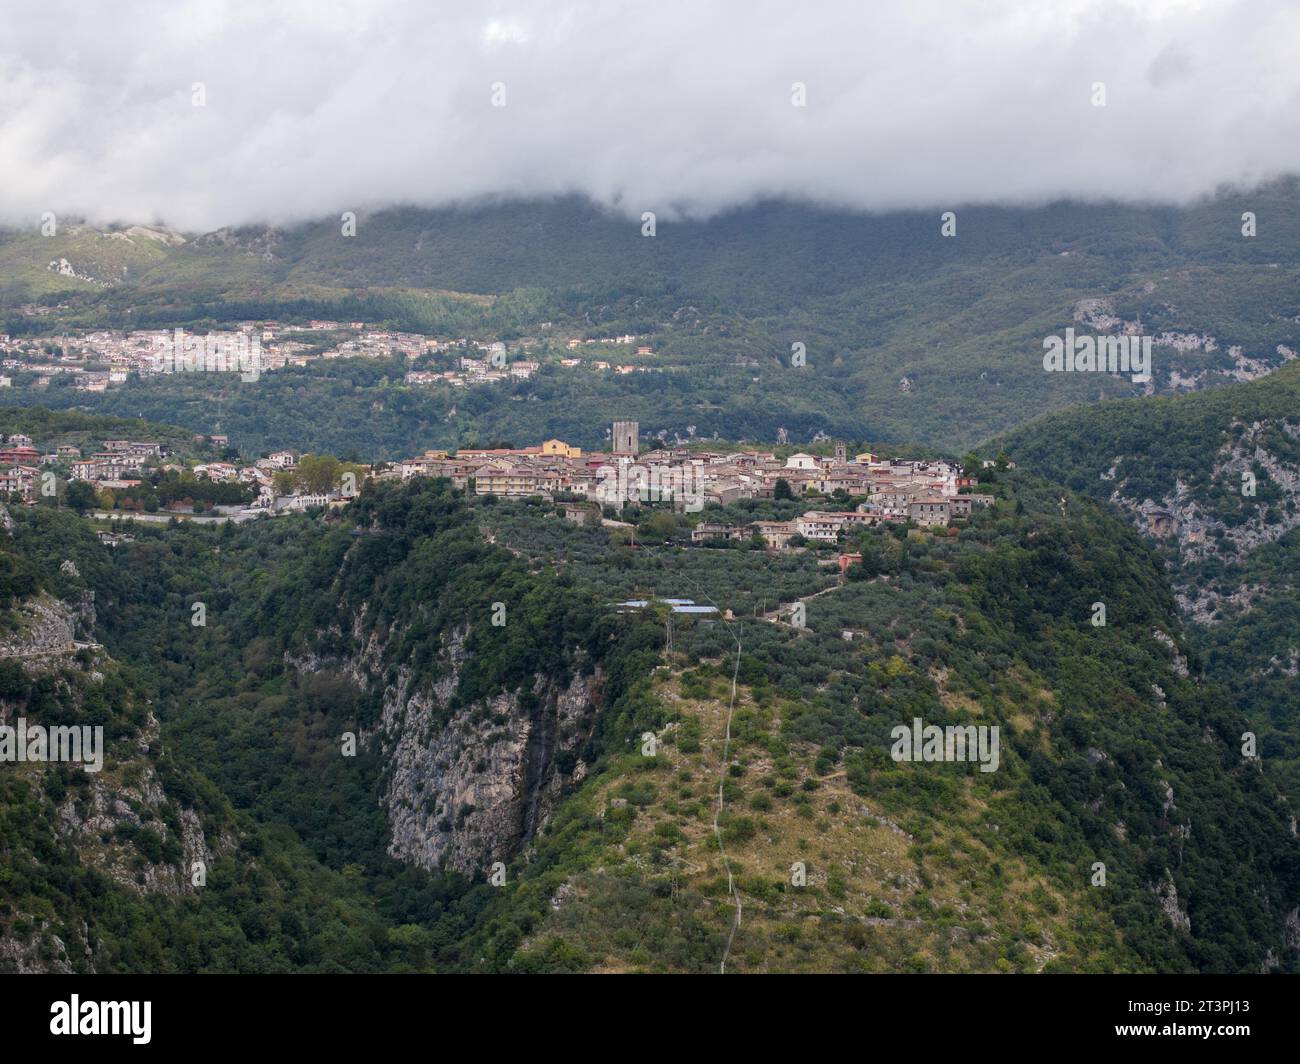 Aerial view of via muro rotto matese region of Campania italy Stock Photo